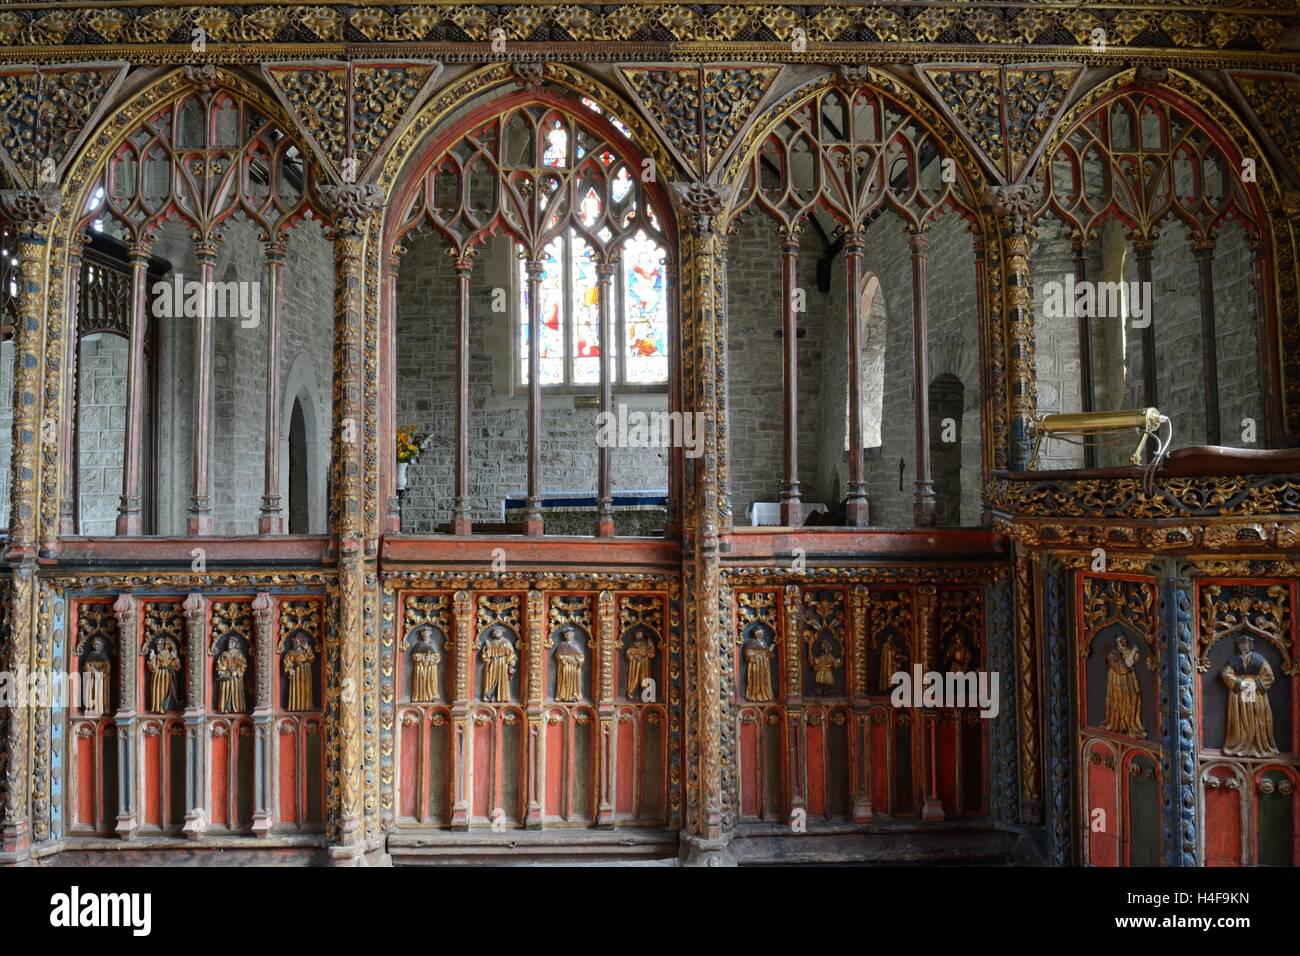 St Thomas Becket Rood Screen Bridford Church Exeter Devon England UK GB Stock Photo